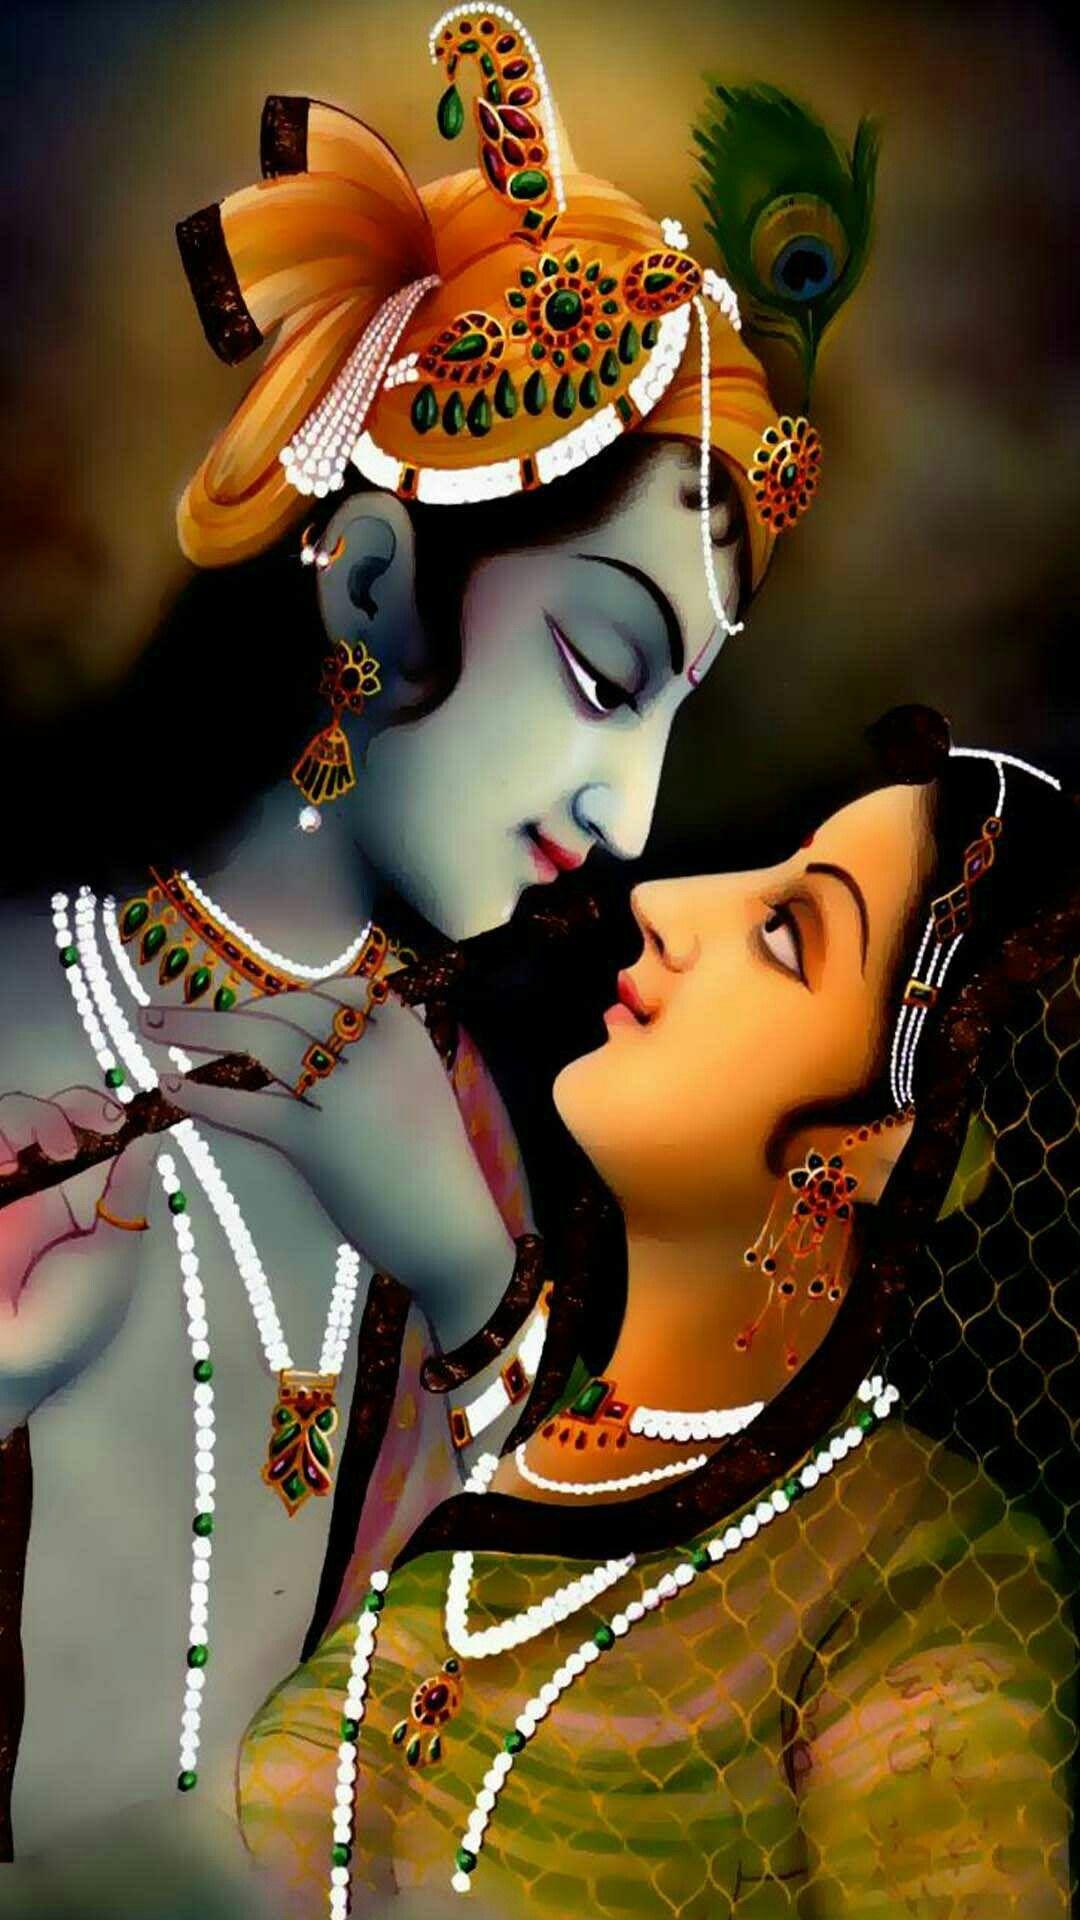 lord krishna and radha love